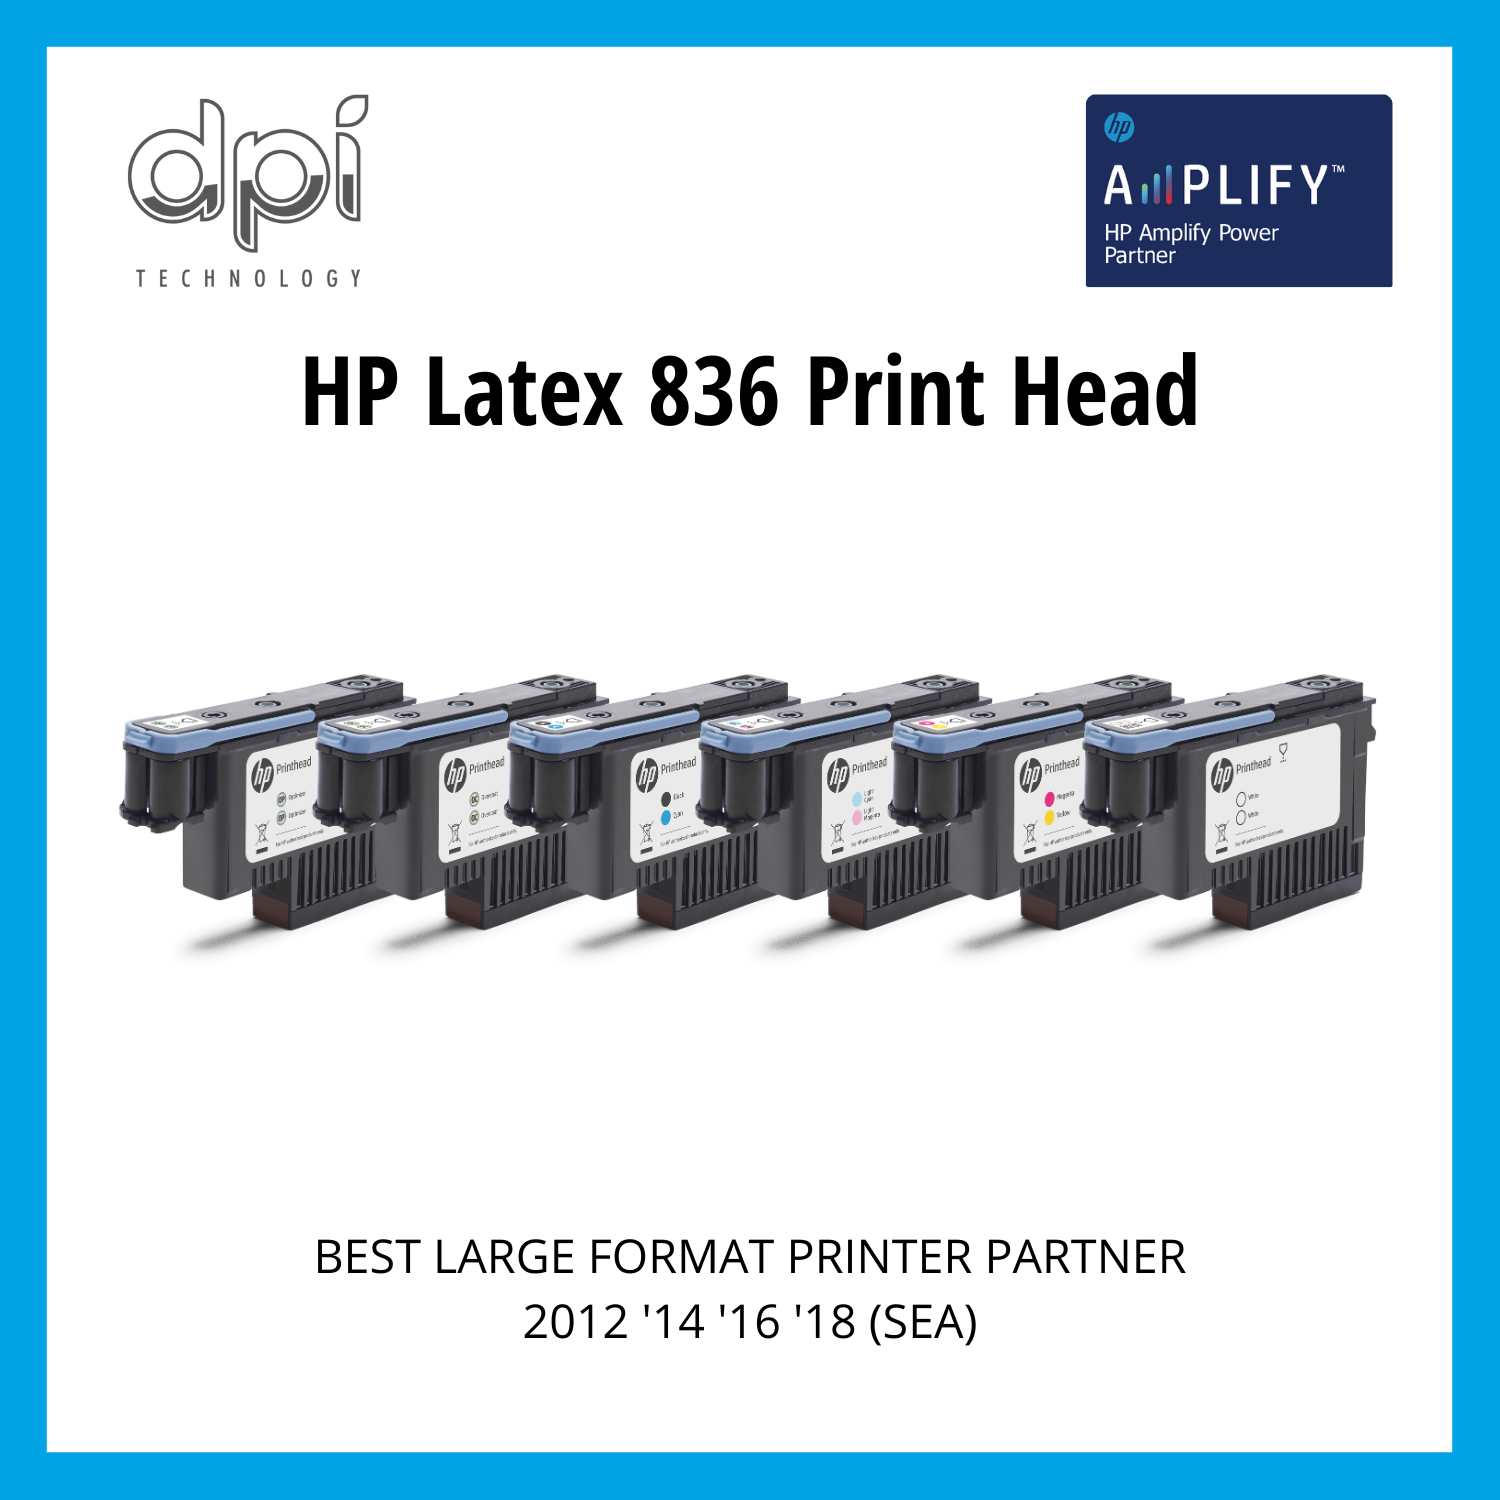 HP Latex 836 Print Head